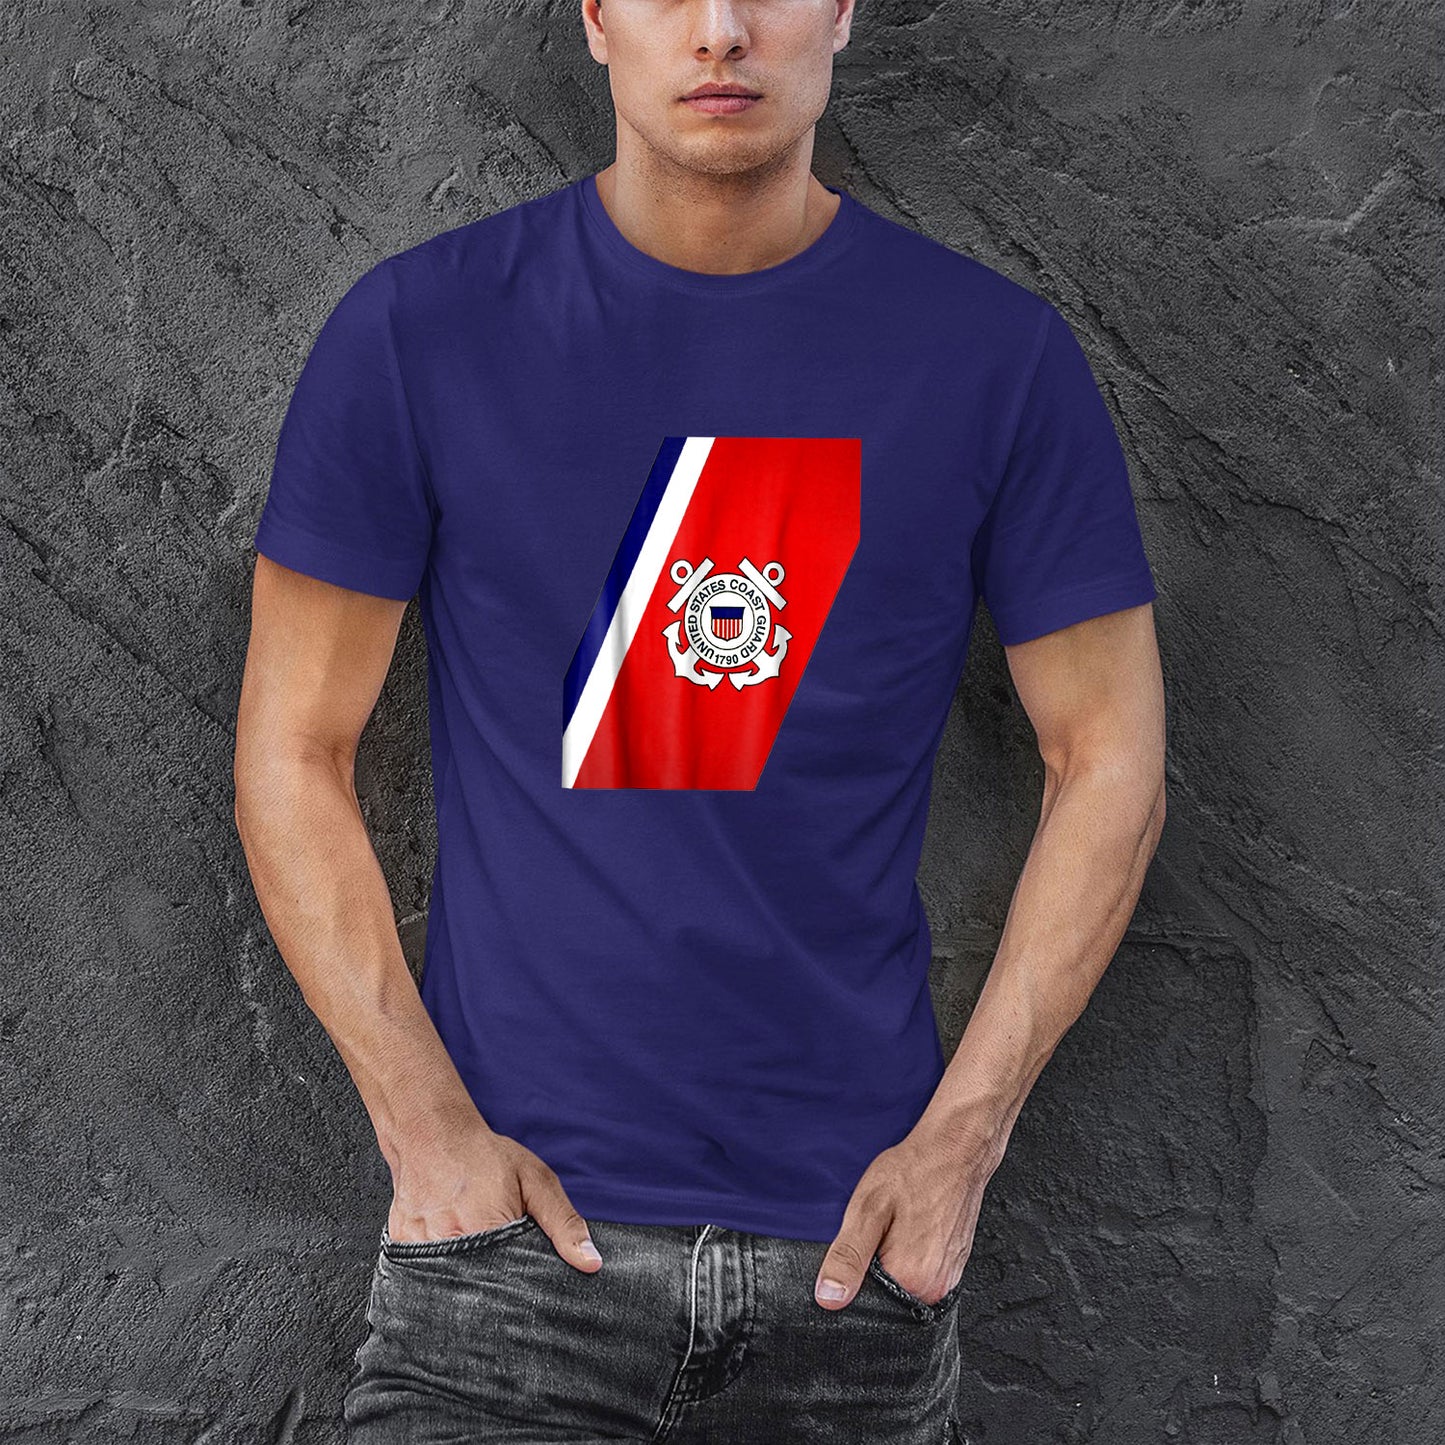 Memorial Day 2021 Uscg Tee Shirts, US Coast Guard Original USCG logo Gift Shirt For Men, Cotton Shirt, Air Force Memorial Shirt, Usaf T Shirt